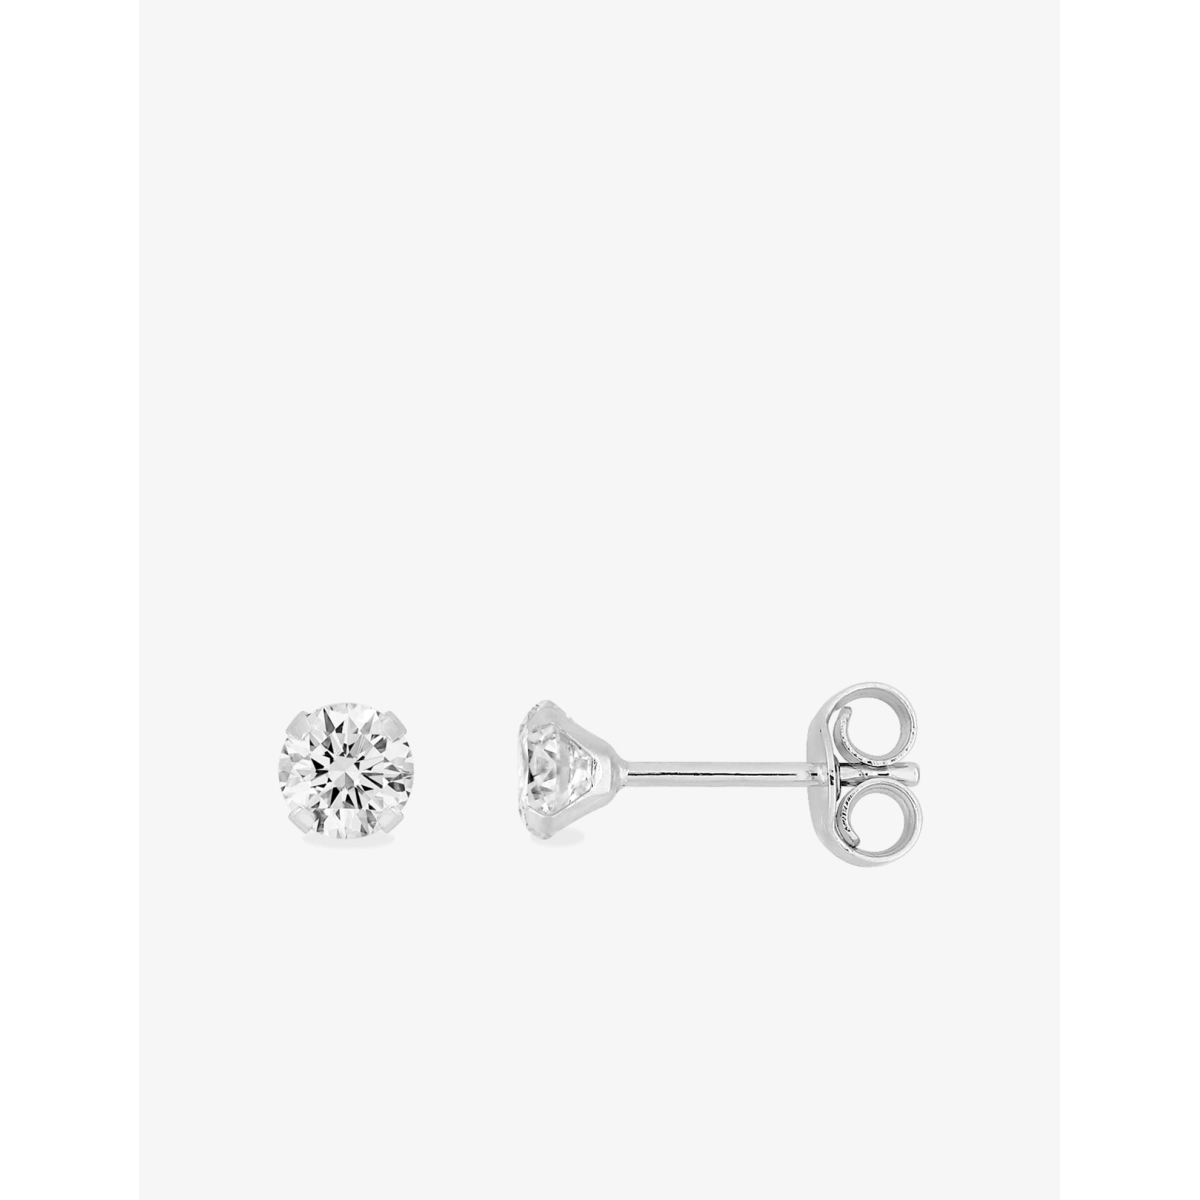 Earrings pair w. cz 4mm 18K WG Lua Blanca  9269.0NH